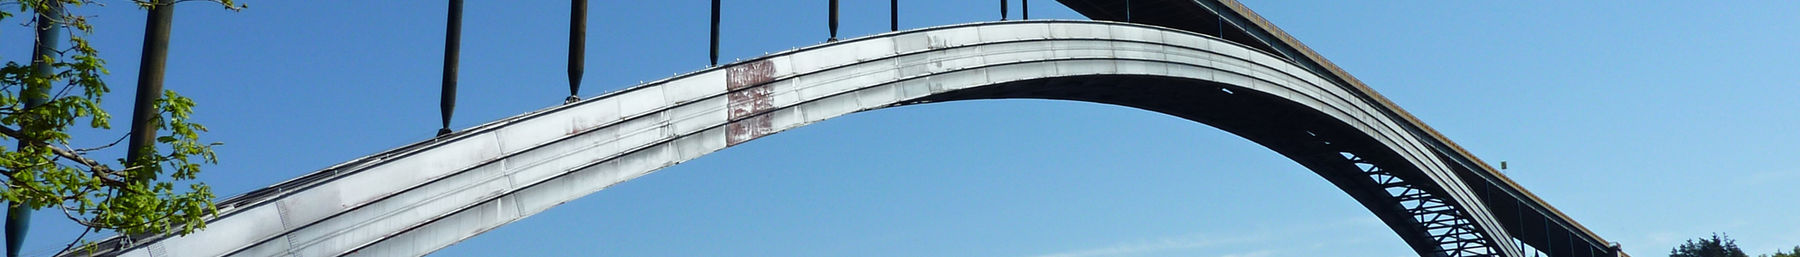 Södra Böhmen banner Žďákov Bridge.jpg